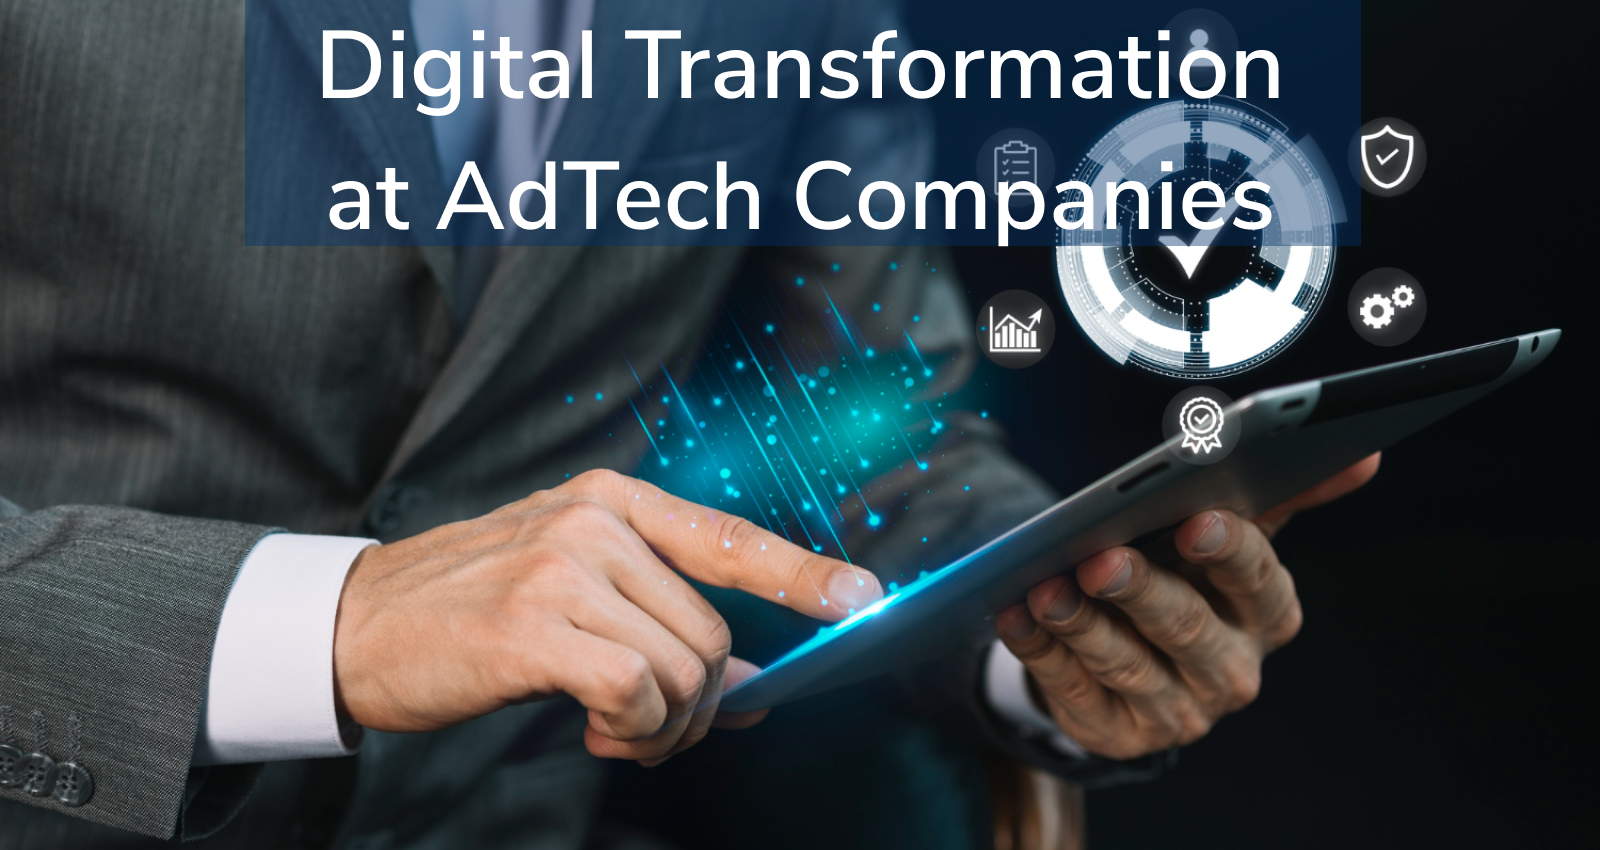 AdTech Companies, Digital Transformation at AdTech Companies, Benefits of Digital Transformation, Digital Marketing for AdTech Companies